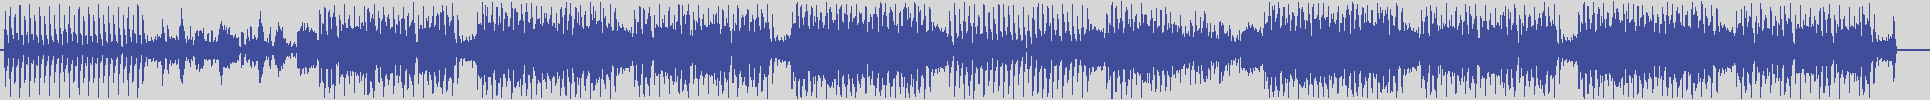 nf_boyz_records [NFY062] Sander Pomellato, Deep Native - Dance Togheter [Star Mix] audio wave form